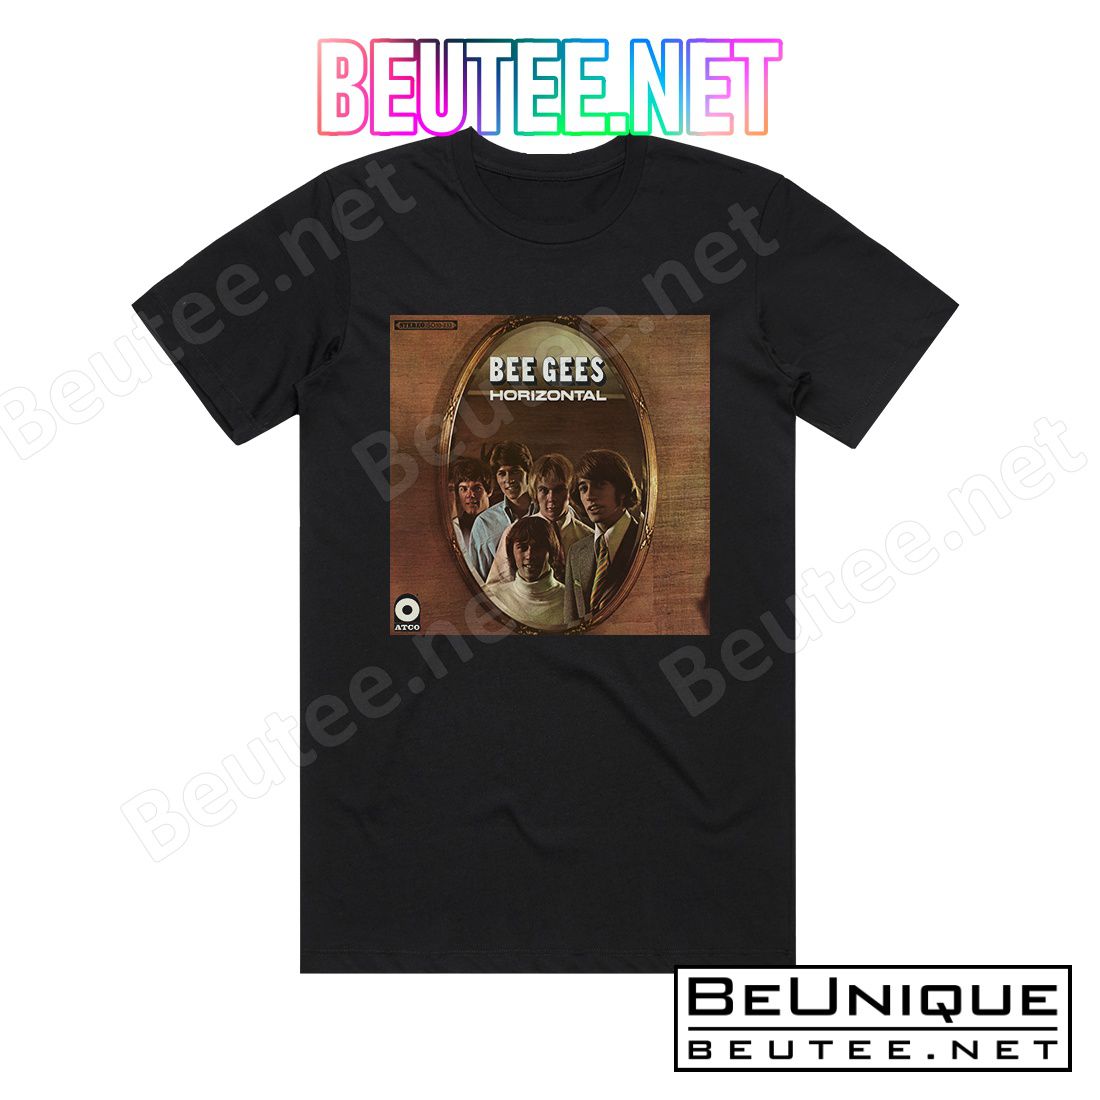 Bee Gees Horizontal 1 Album Cover T-Shirt